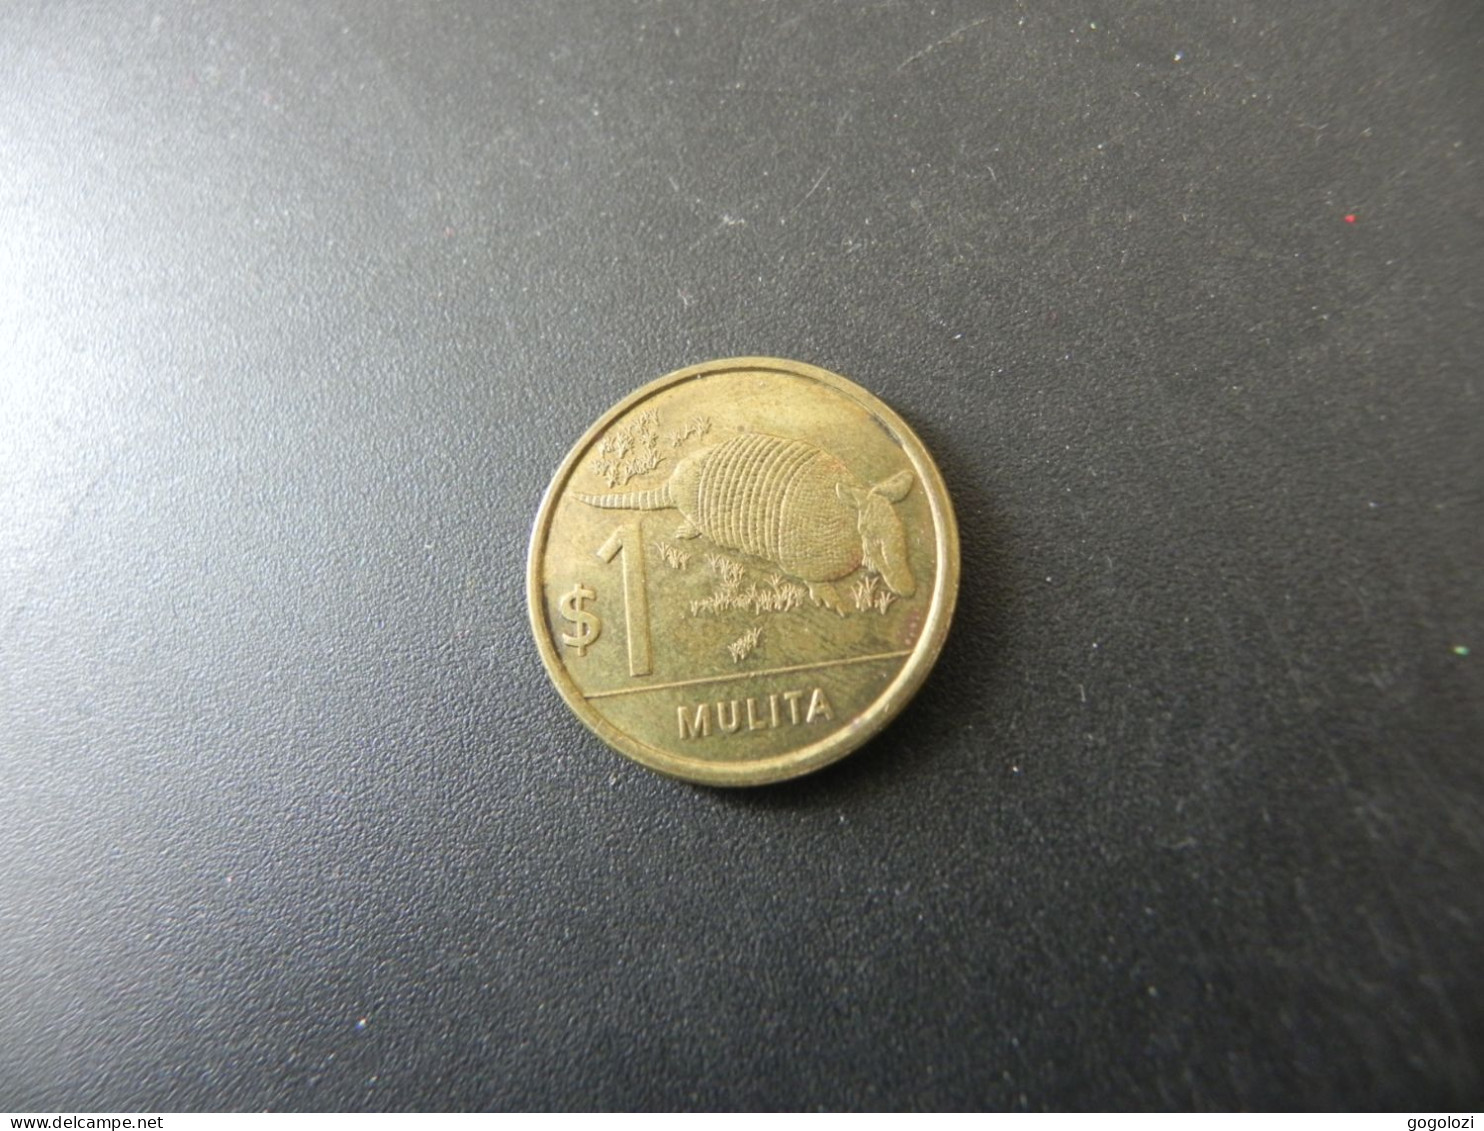 Uruguay 1 Peso 2012 - Uruguay